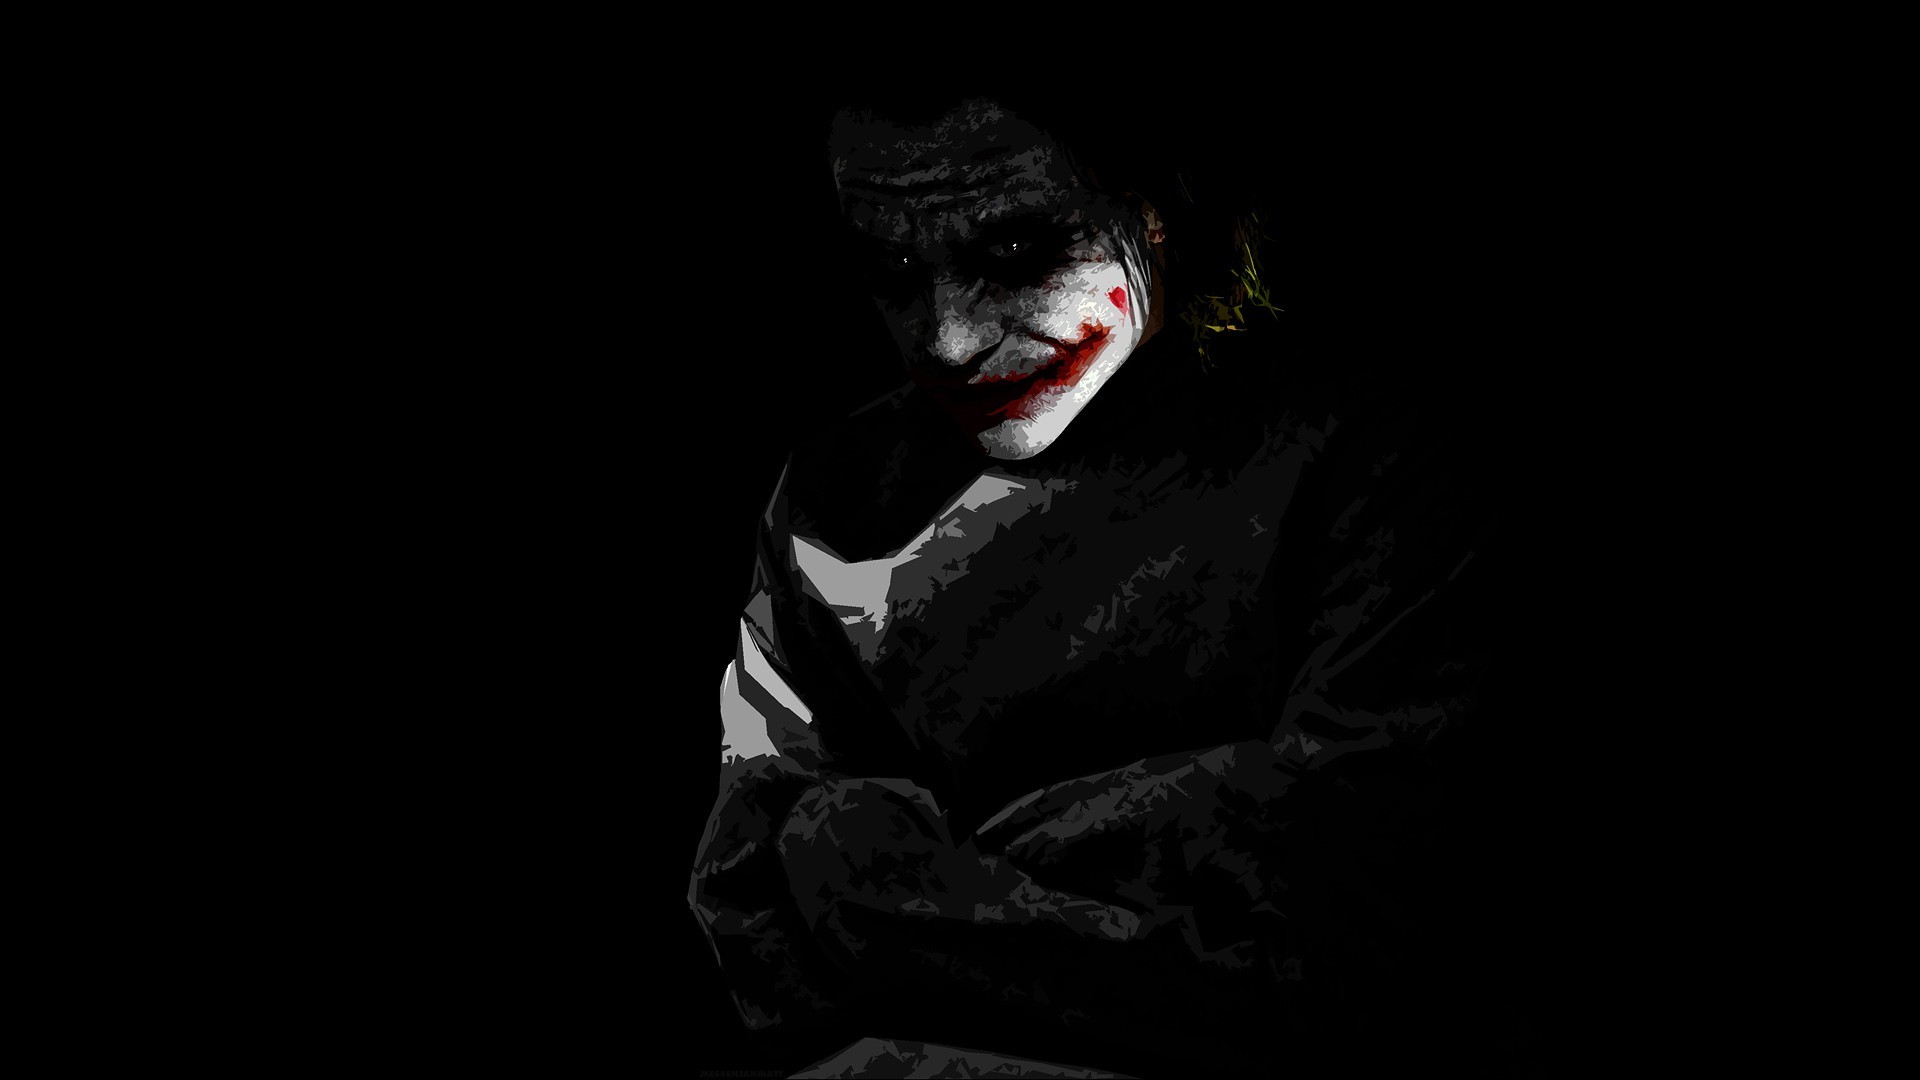 General 1920x1080 The Dark Knight Joker movies MessenjahMatt Heath Ledger simple background black background artwork